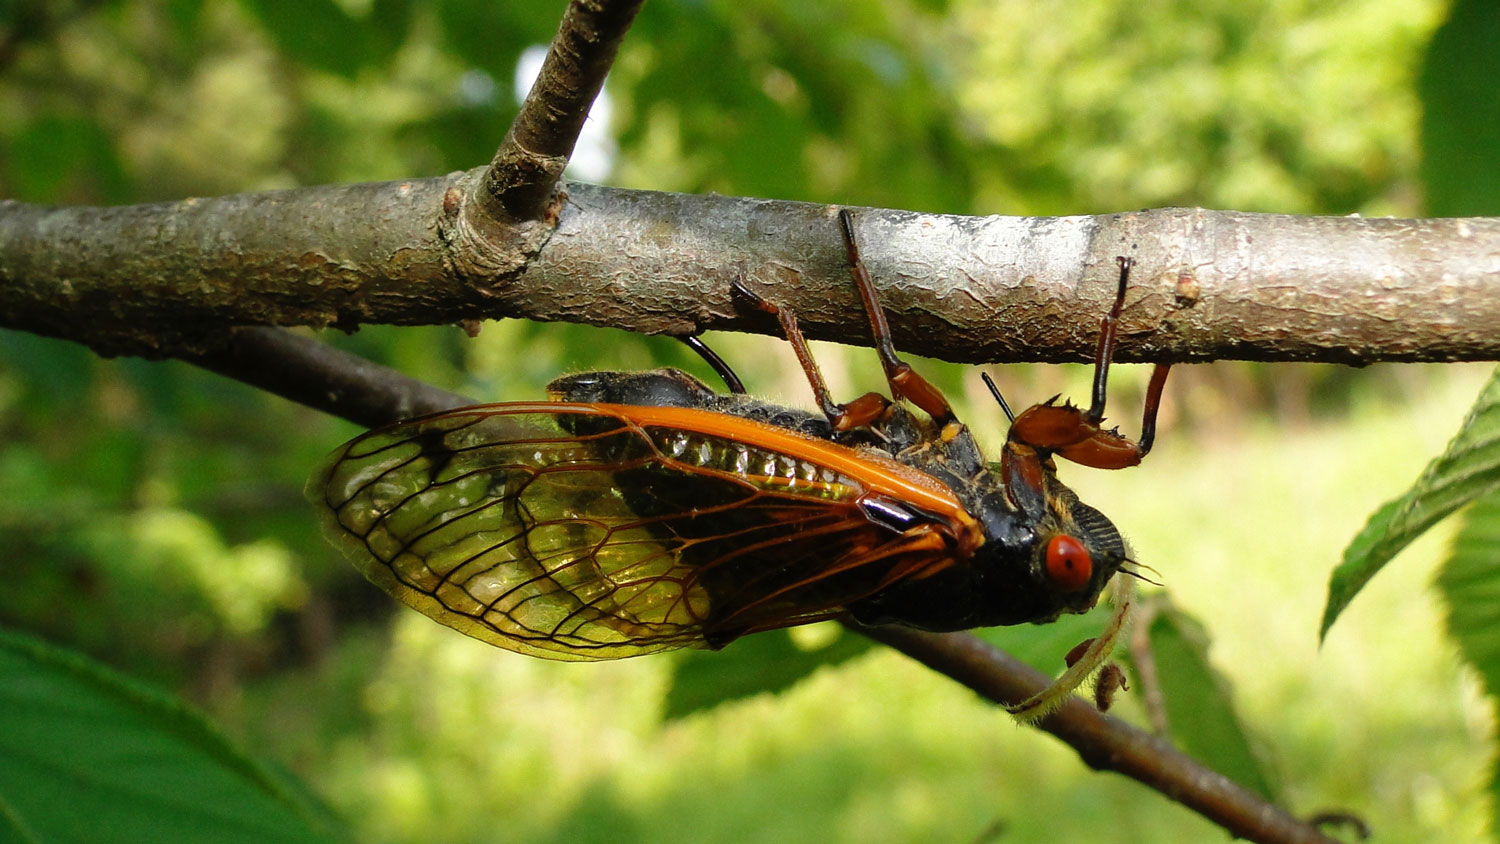 A cicada ovipositing. Photo credit: Clyde Sorenson